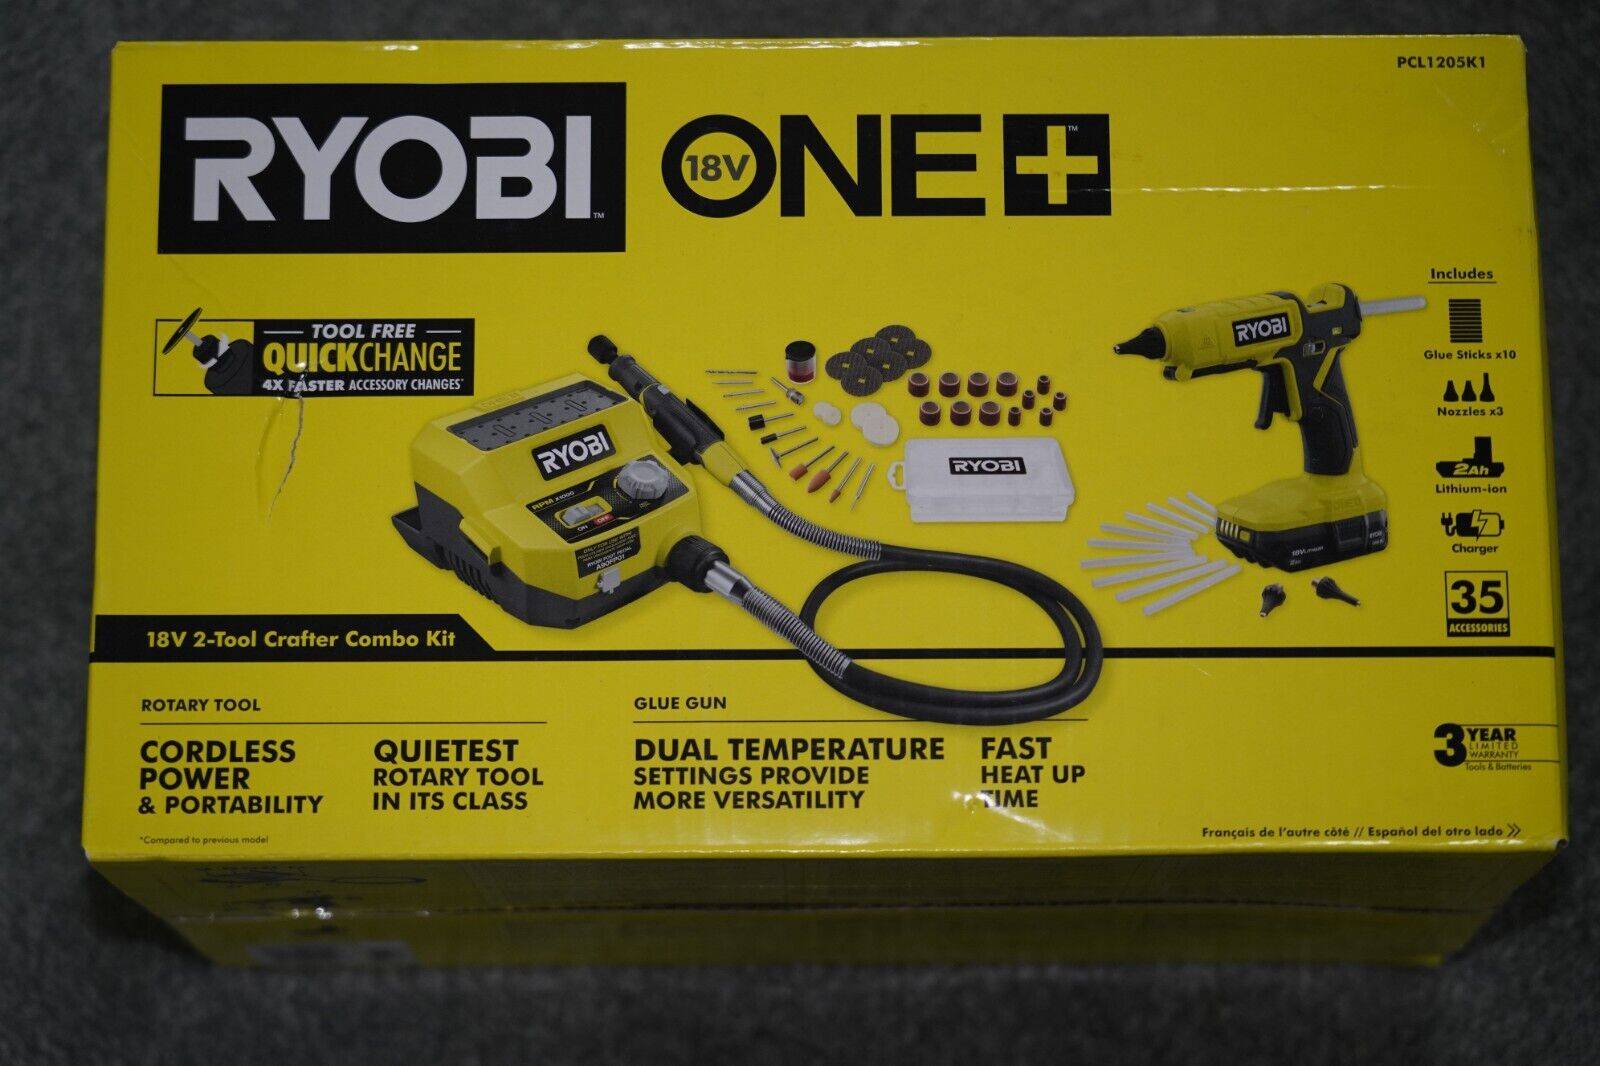 RYOBI Introduces New 18V ONE+ Glue Gun